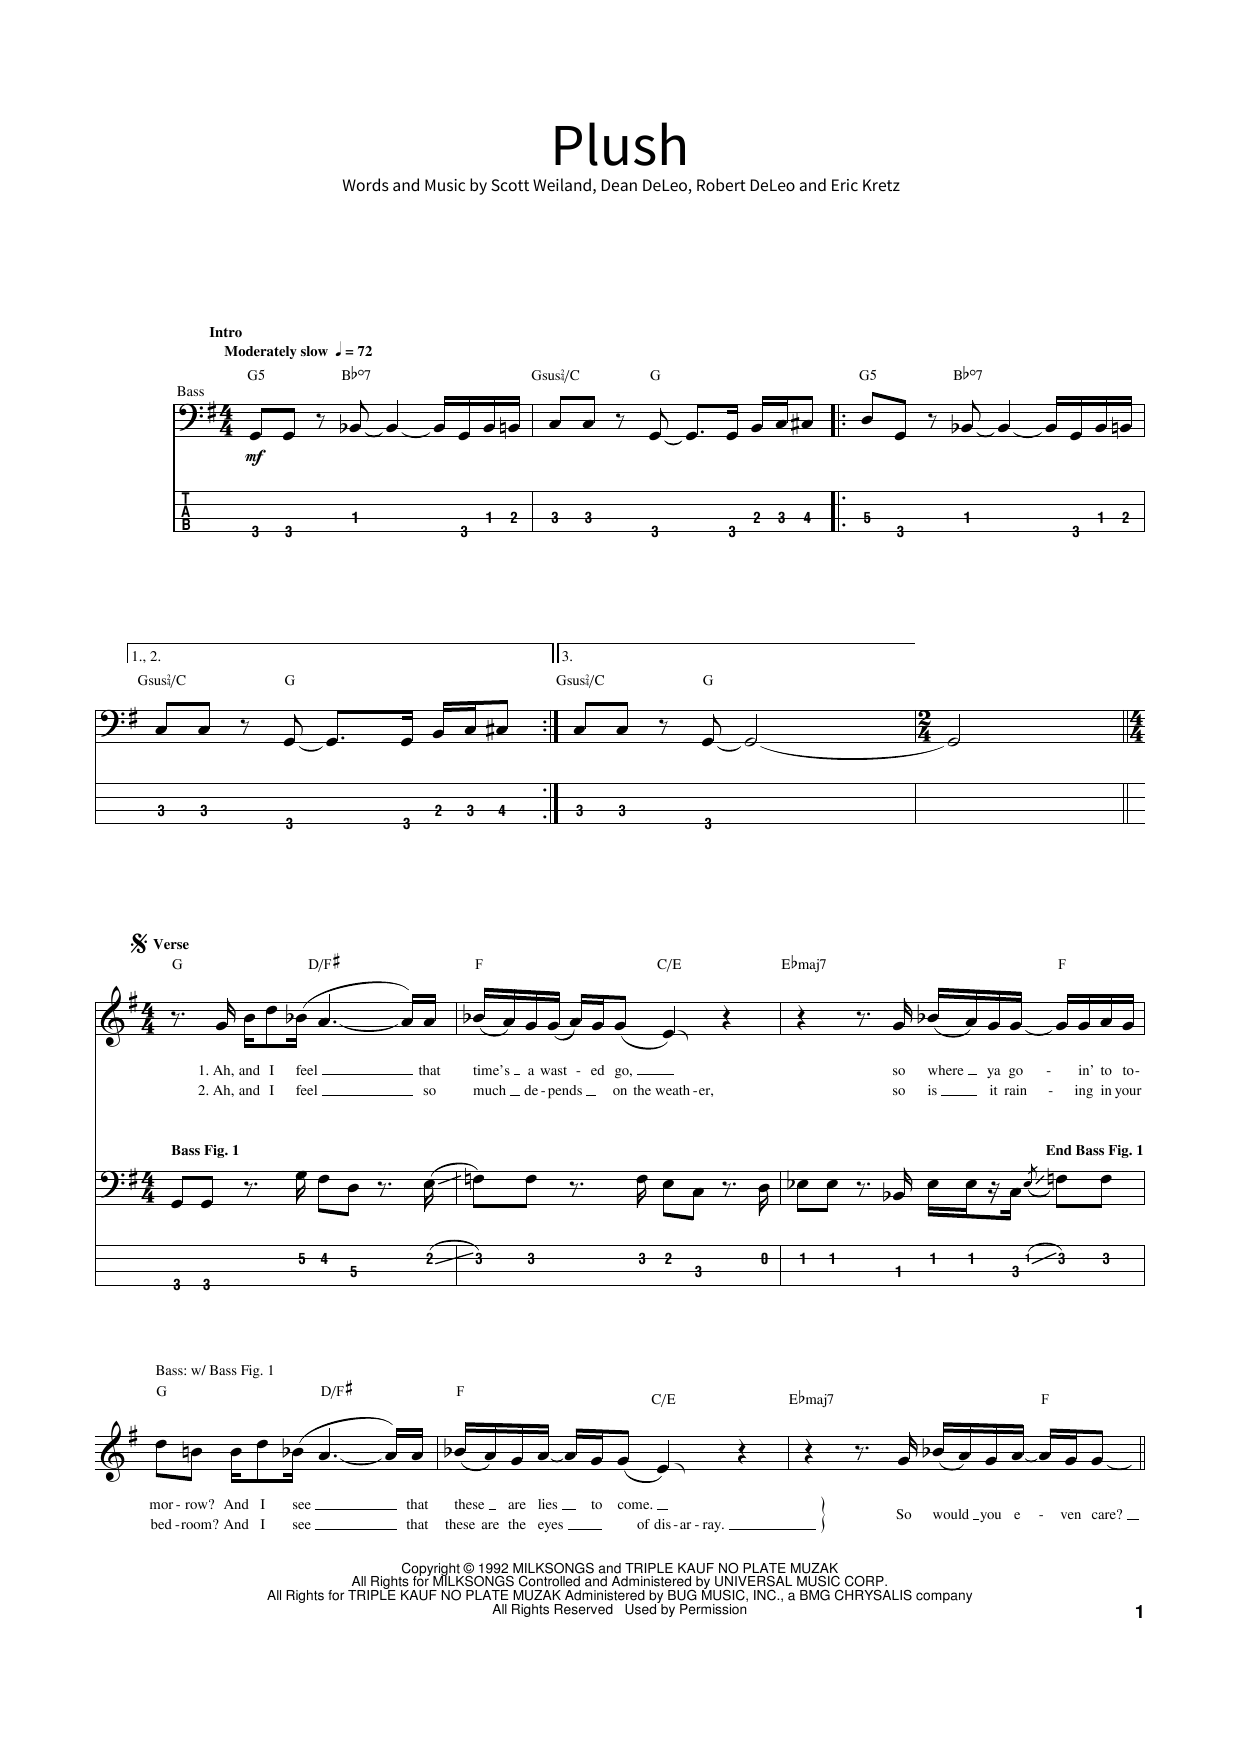 Stone Temple Pilots 'Plush' Sheet Music Notes, Chords Download Pr...